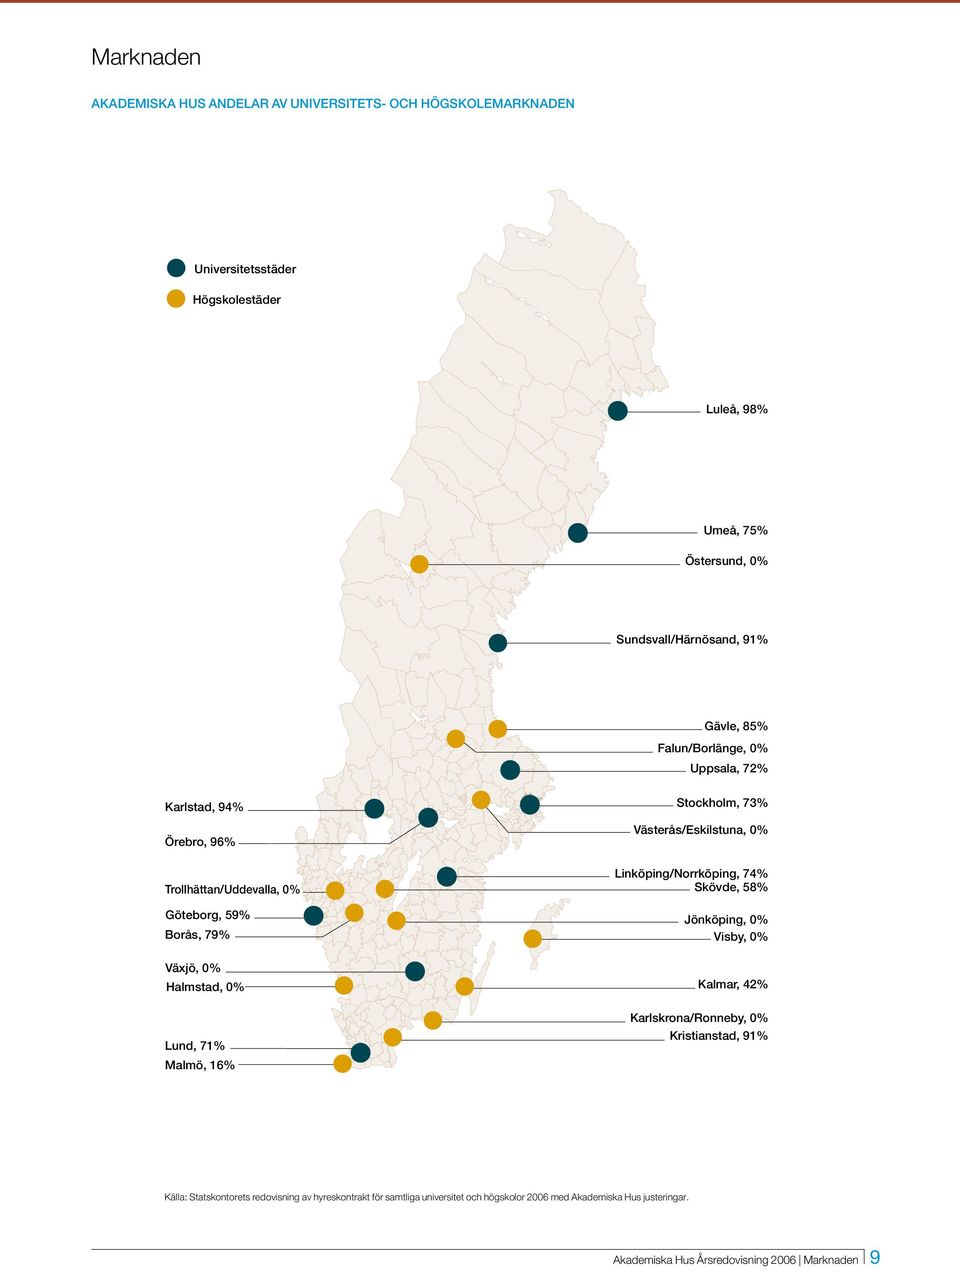 Skövde, 58% Göteborg, 59% Borås, 79% Växjö, 0% Halmstad, 0% Lund, 7% Malmö, 6% Jönköping, 0% Visby, 0% Kalmar, 4% Karlskrona/Ronneby, 0% Kristianstad, 9% Källa: